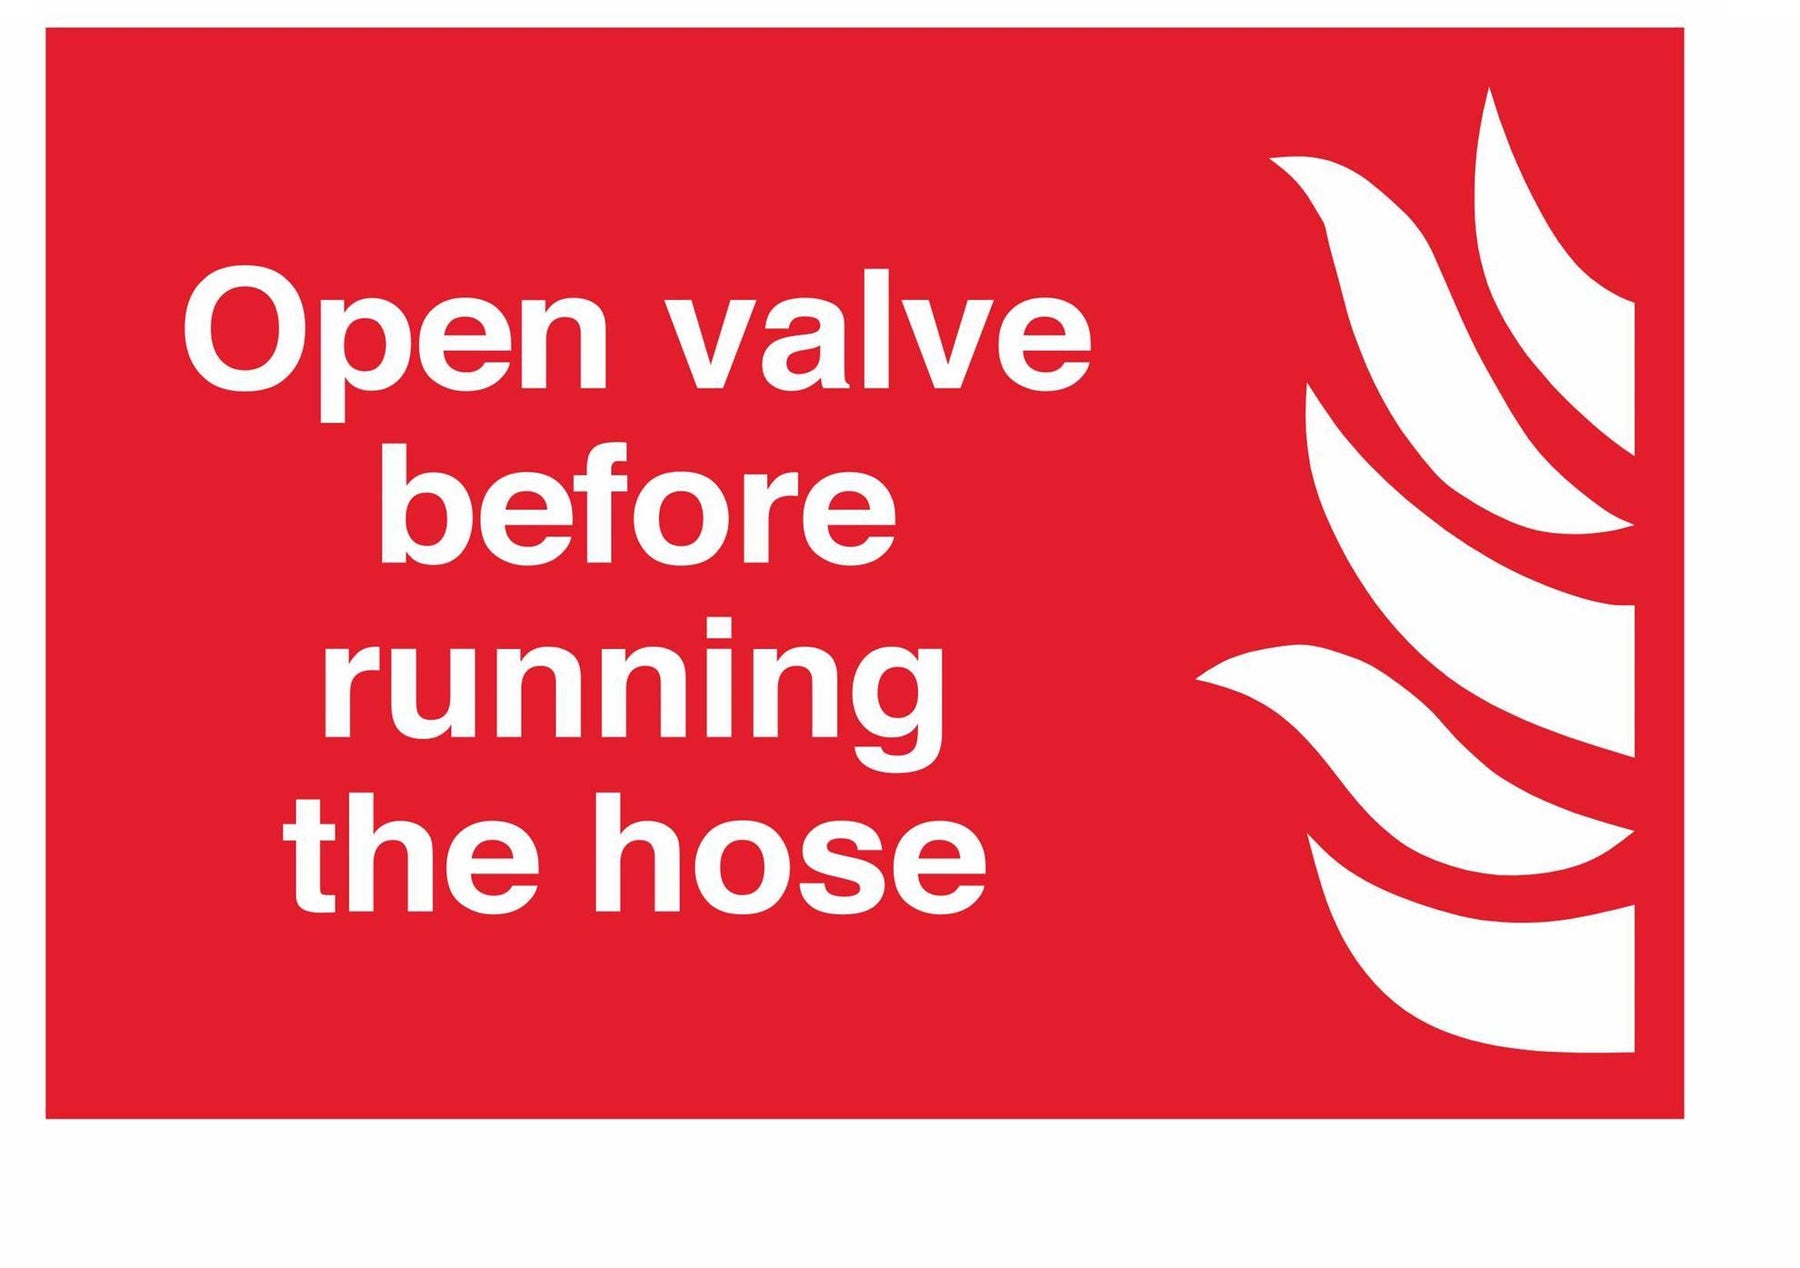 Open valve before running the hose